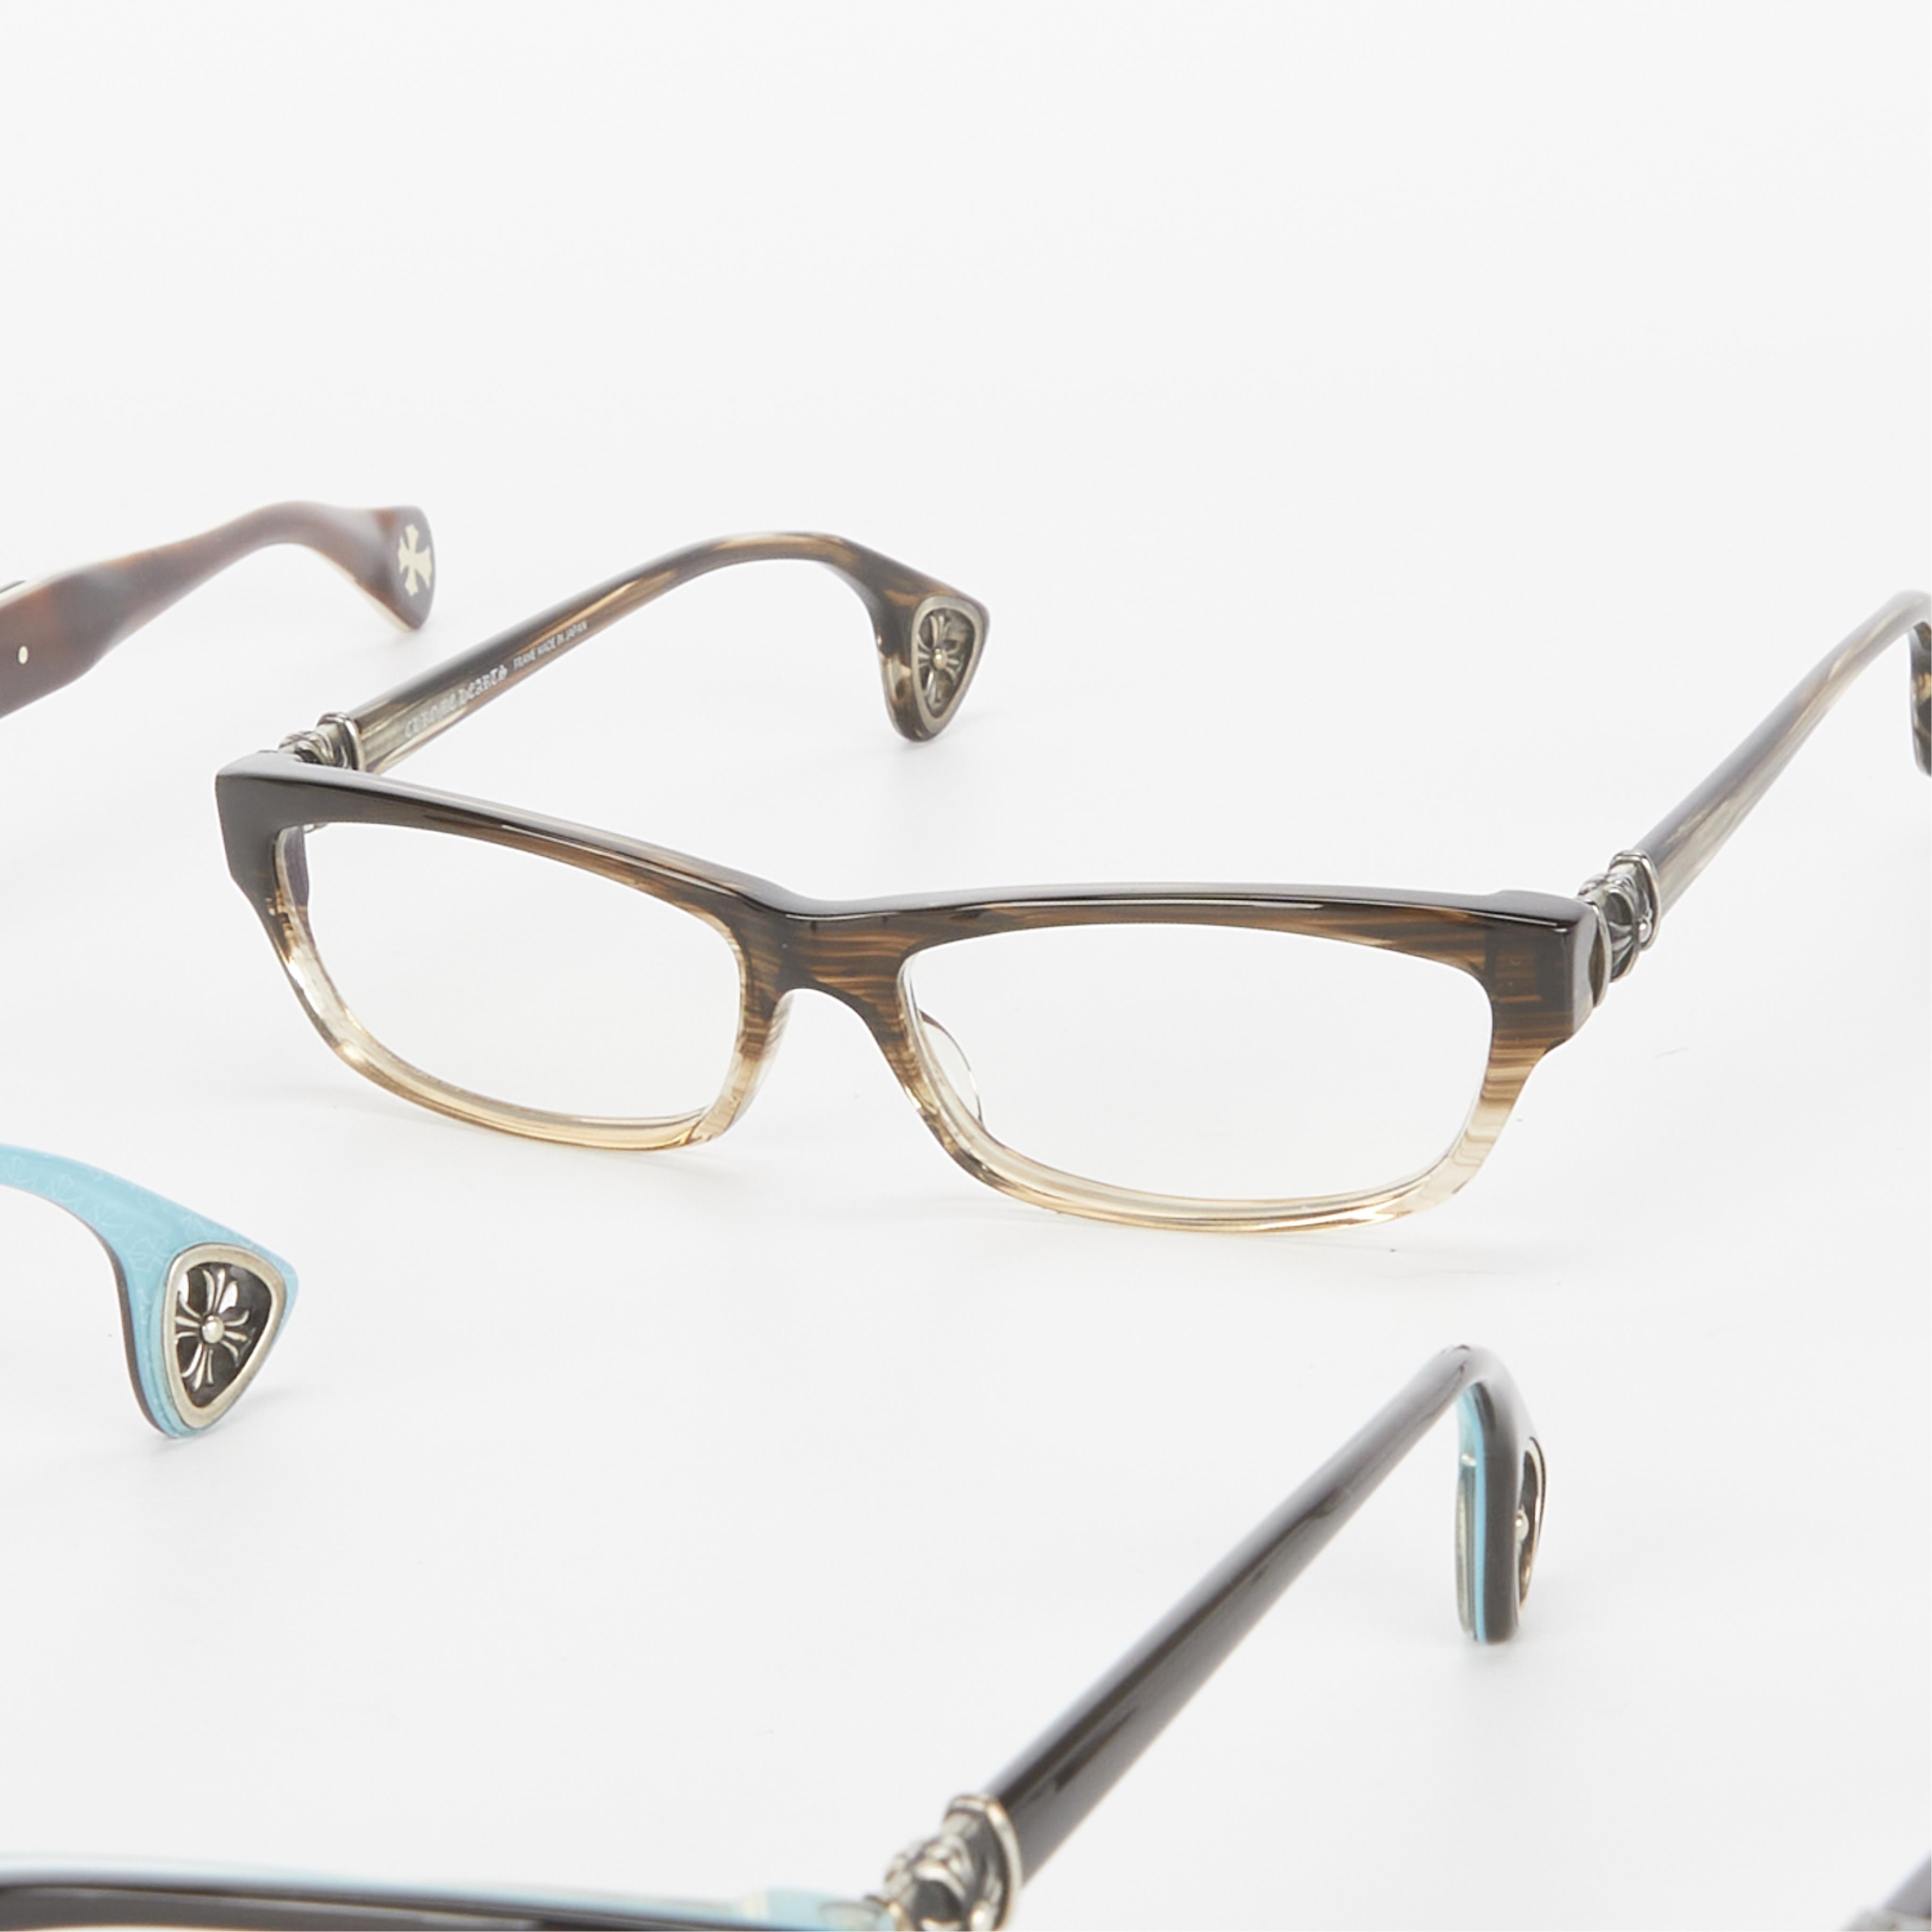 Grp of 6 Chrome Hearts Eyeglasses - Image 7 of 12